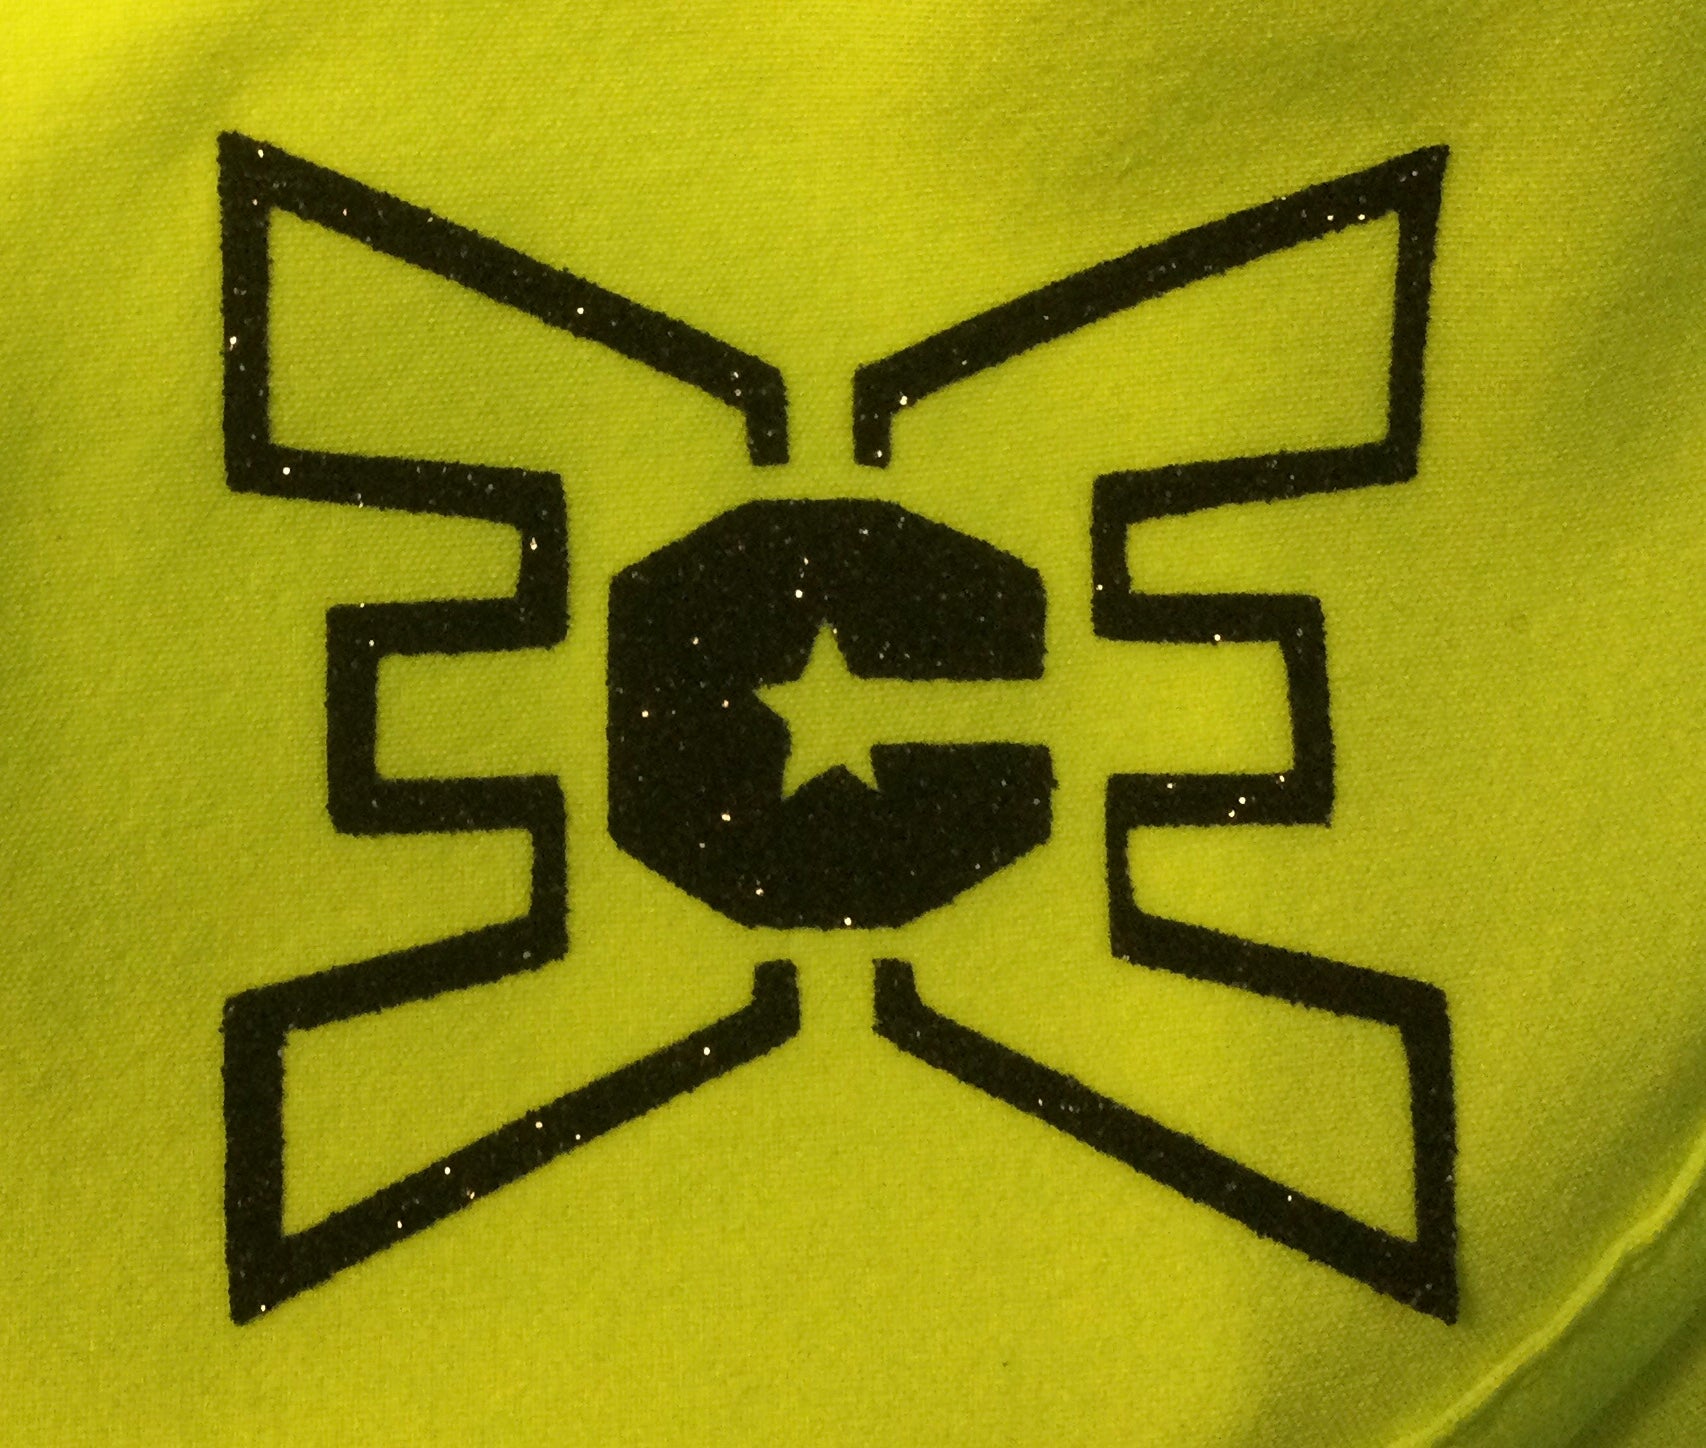 Shorts Yellow with Black Sparkle Logo